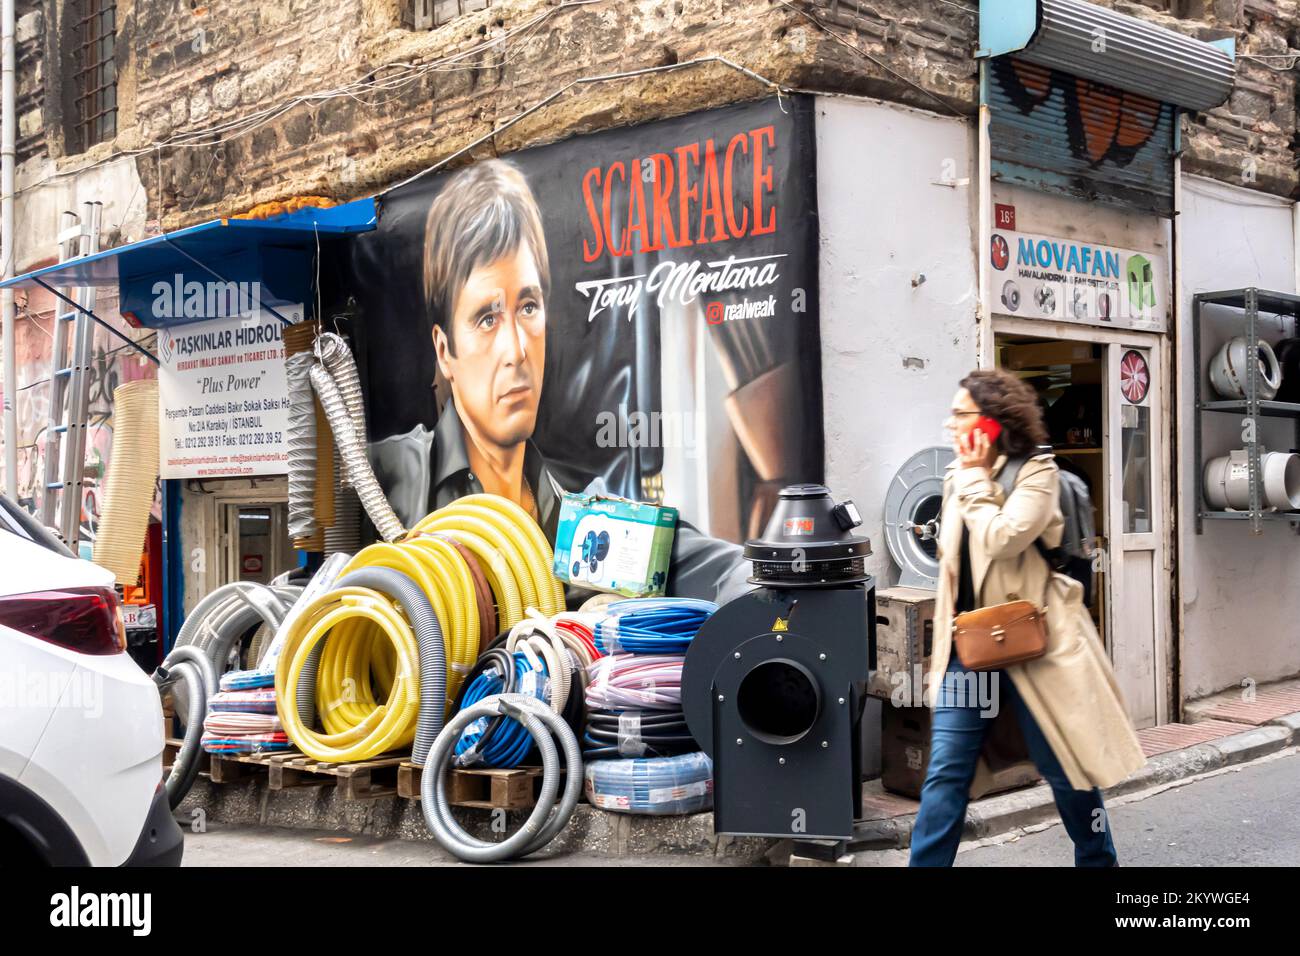 Scarface Al Pacino Tony Montana mural on the wall of power supplies equipment shop in Karakoy Istanbul Turkey Stock Photo